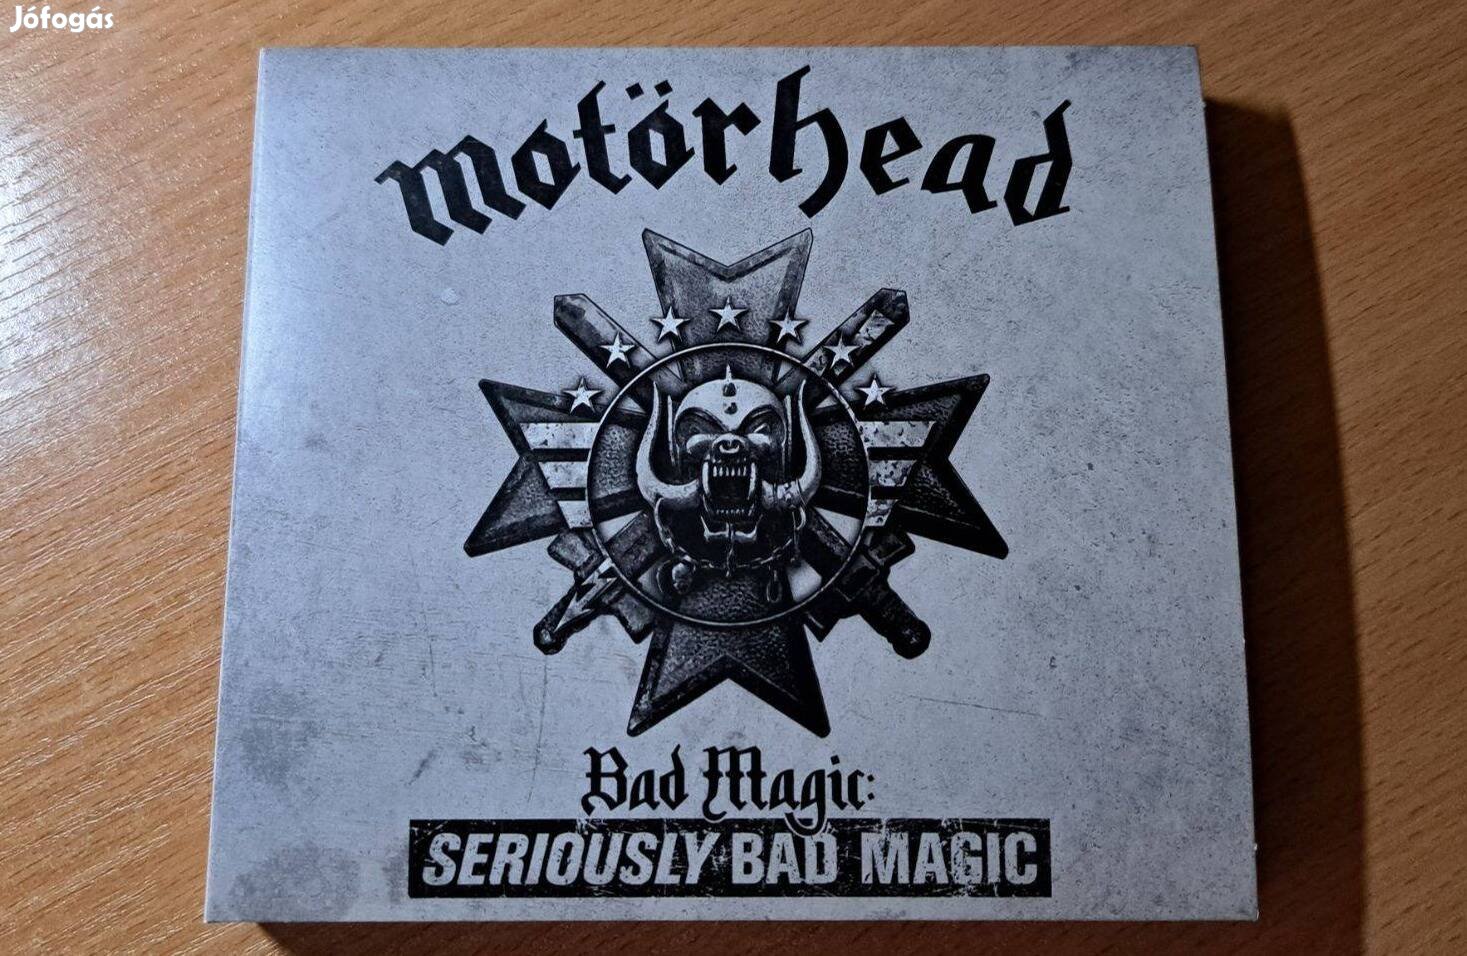 Motörhead - Bad Magic - Seriously Bad Magic - dupla CD